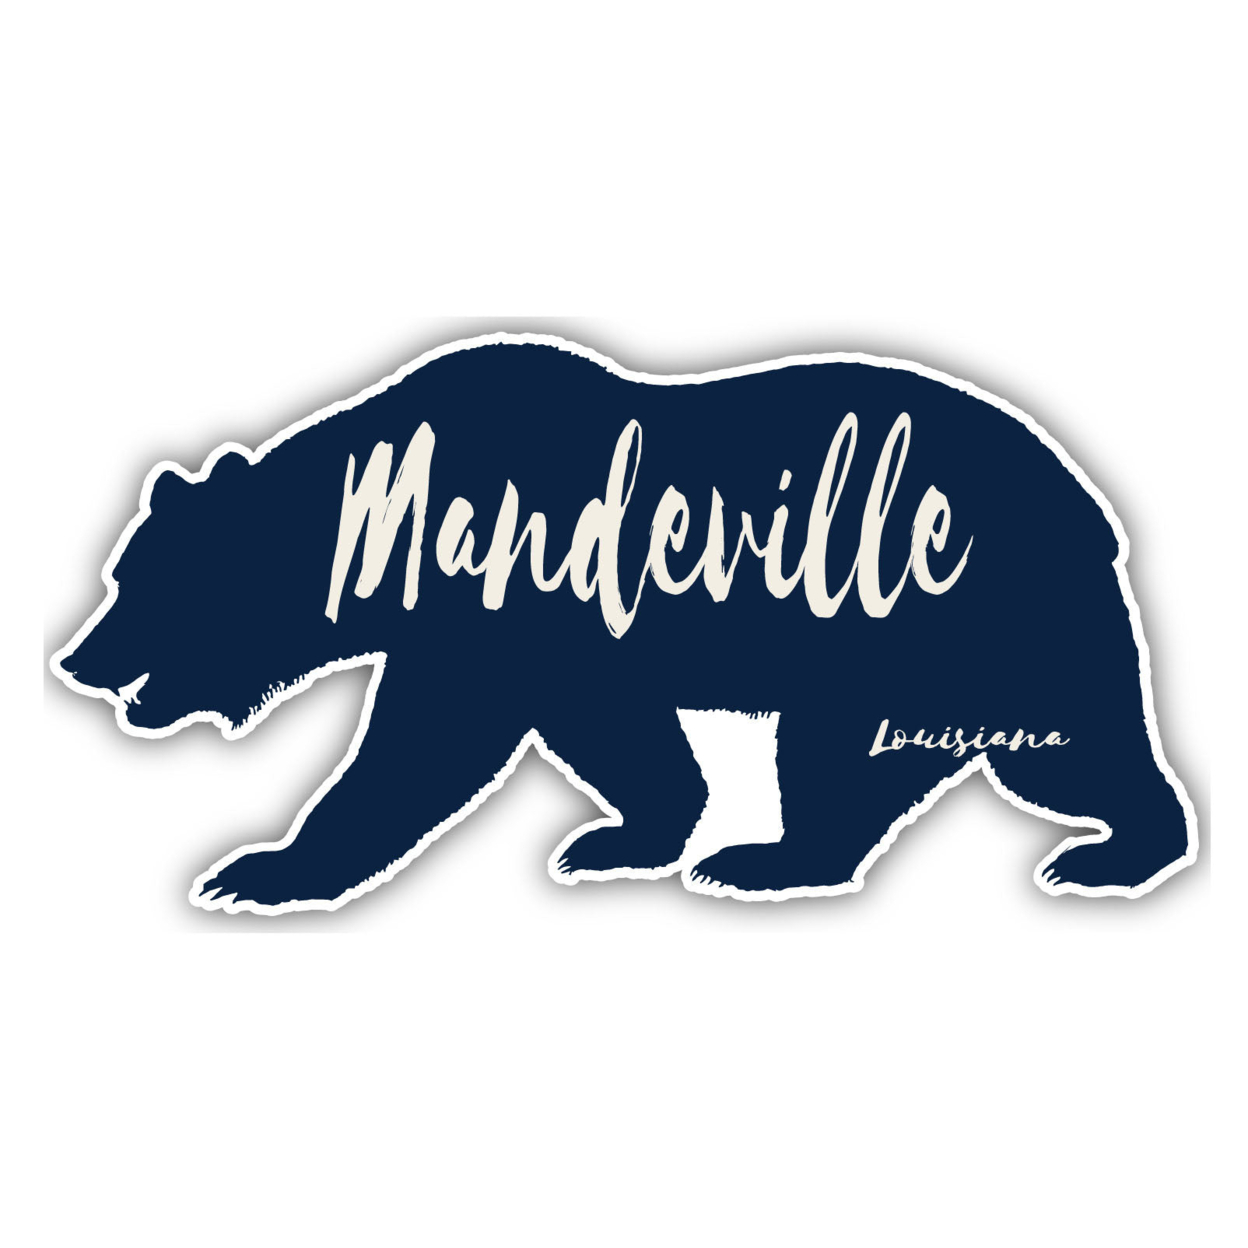 Mandeville Louisiana Souvenir Decorative Stickers (Choose Theme And Size) - 2-Inch, Tent